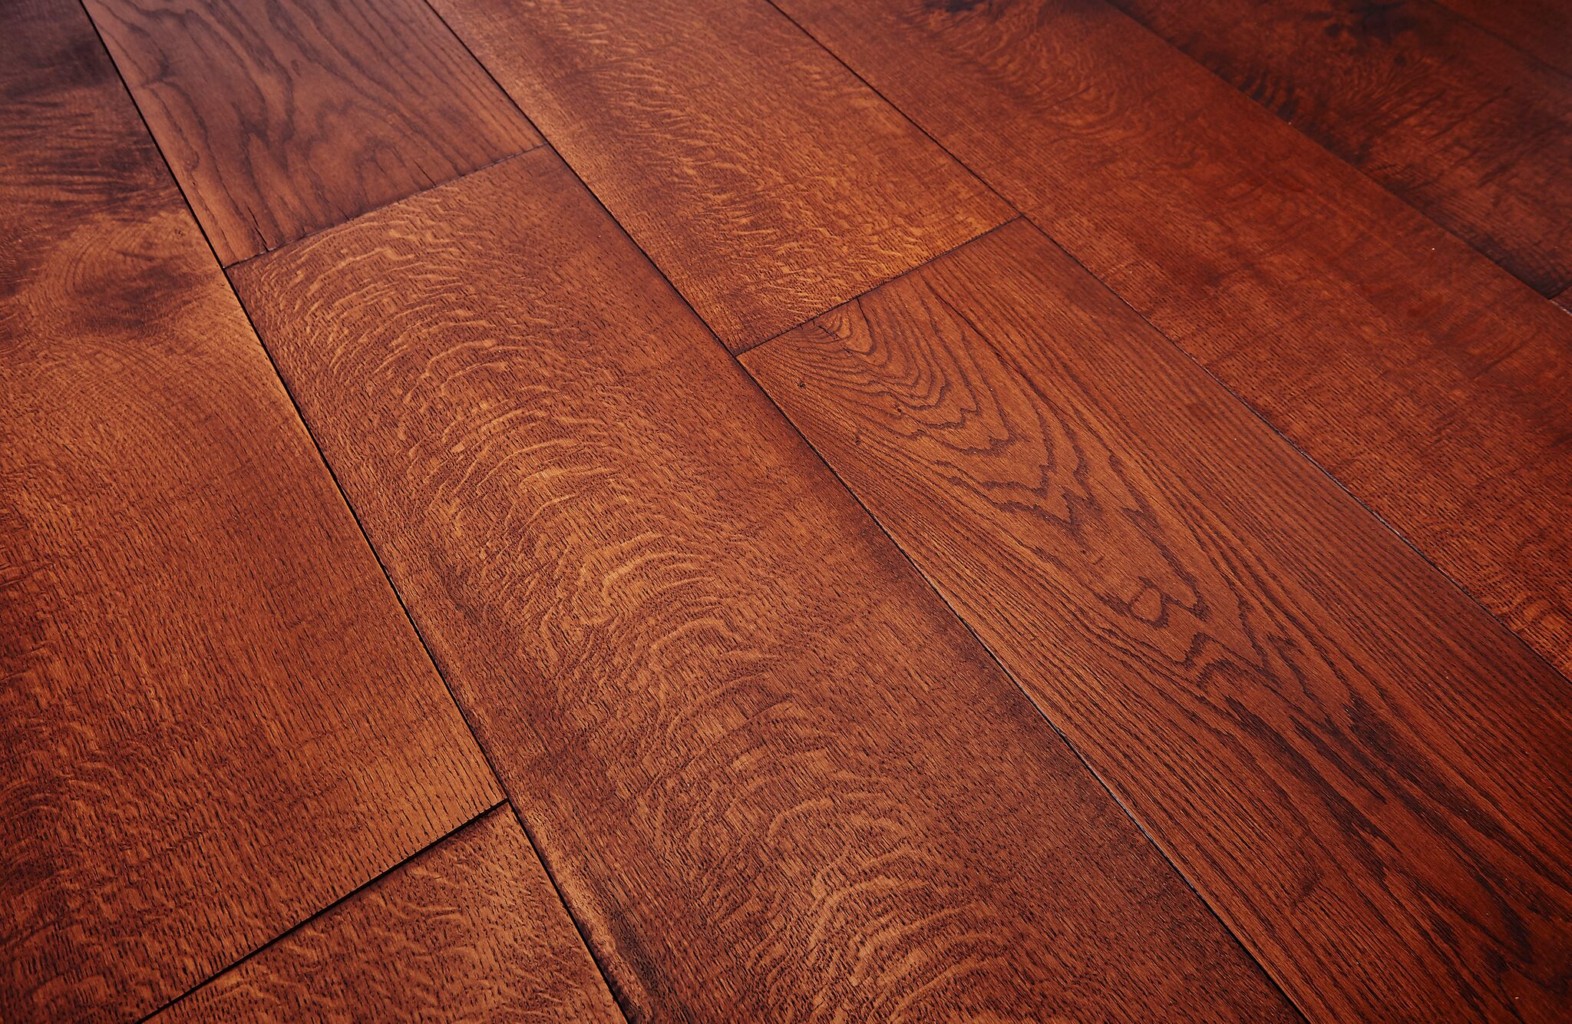 Reclaimed Wood Floor